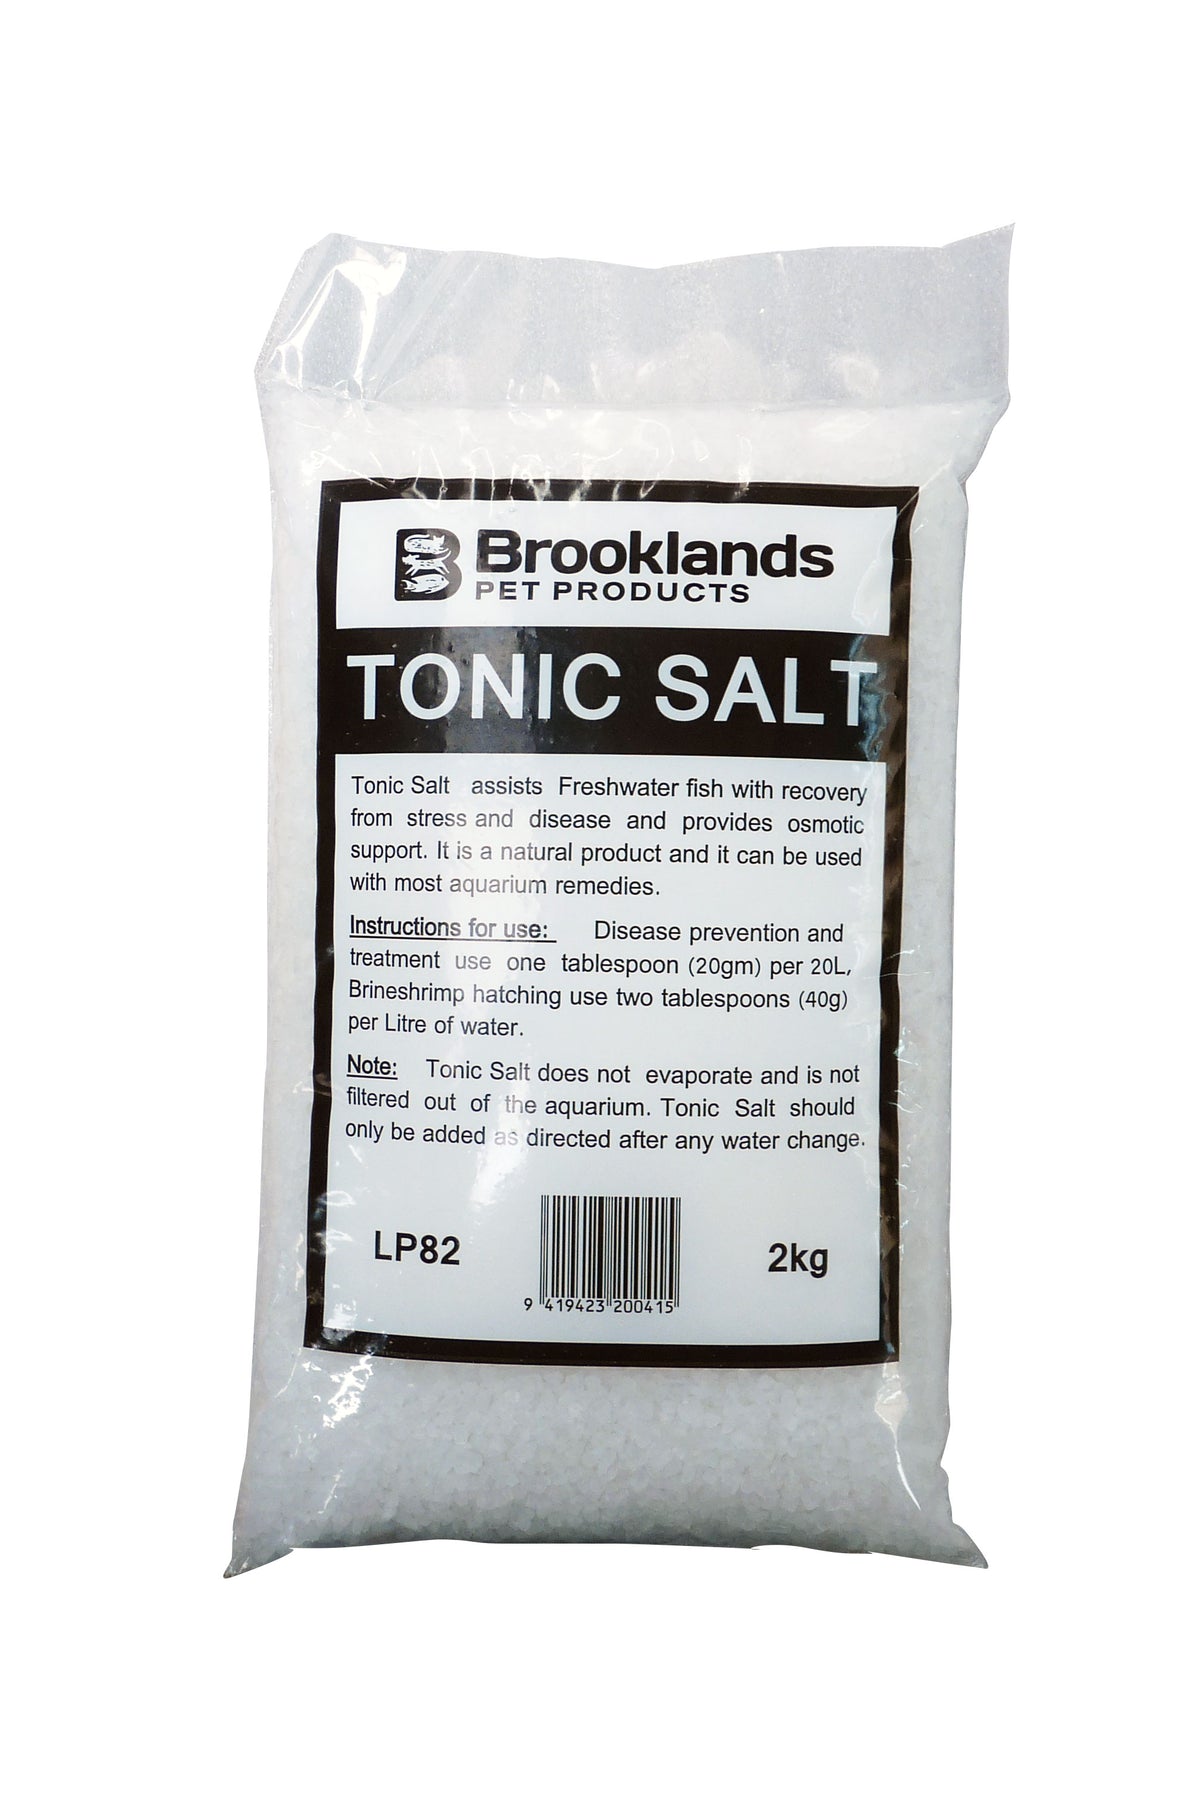 Brooklands Tonic Salt